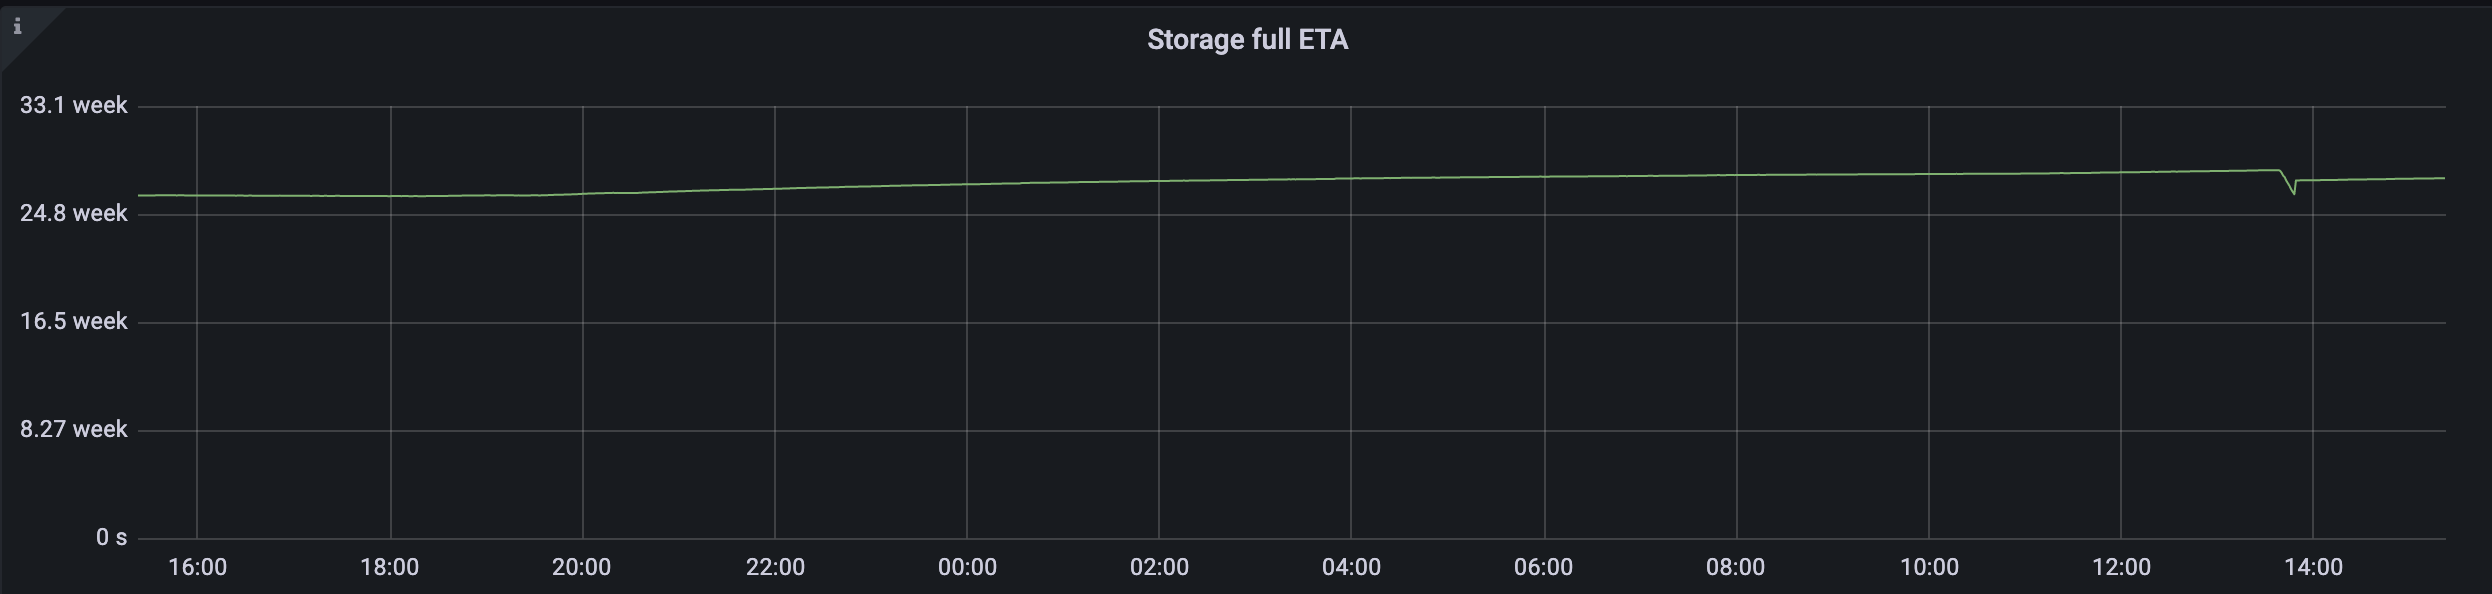 Storage capacity ETA after applying relabeling config